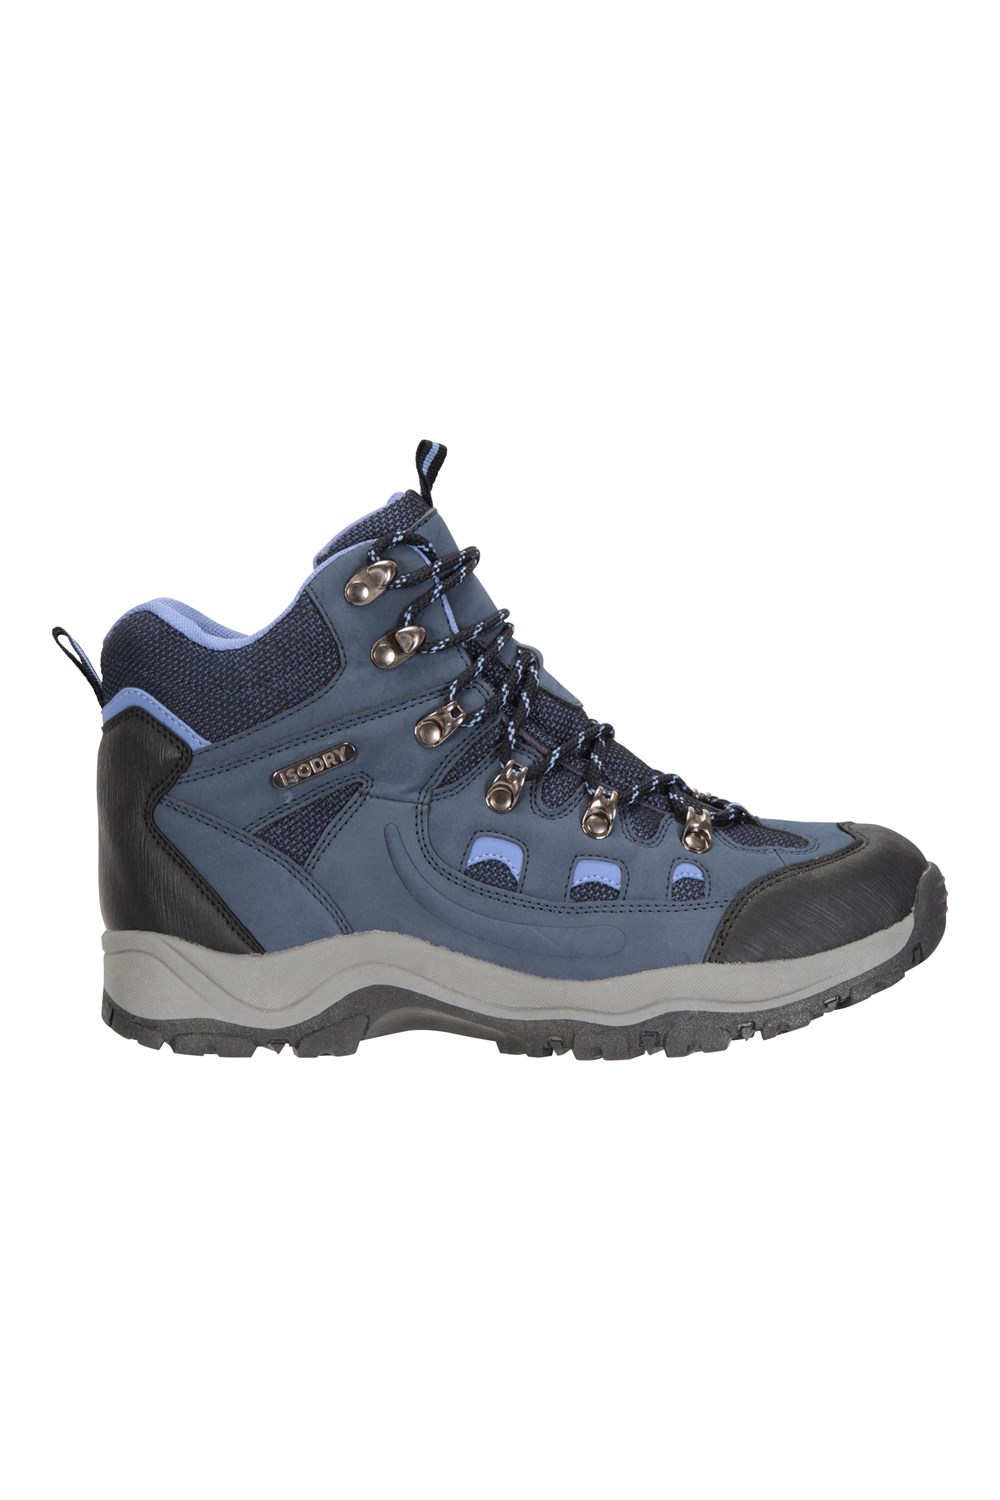 miniature 54 - Mountain Warehouse Womens Waterproof Hiking Boots Walking Trekking Ladies Boot